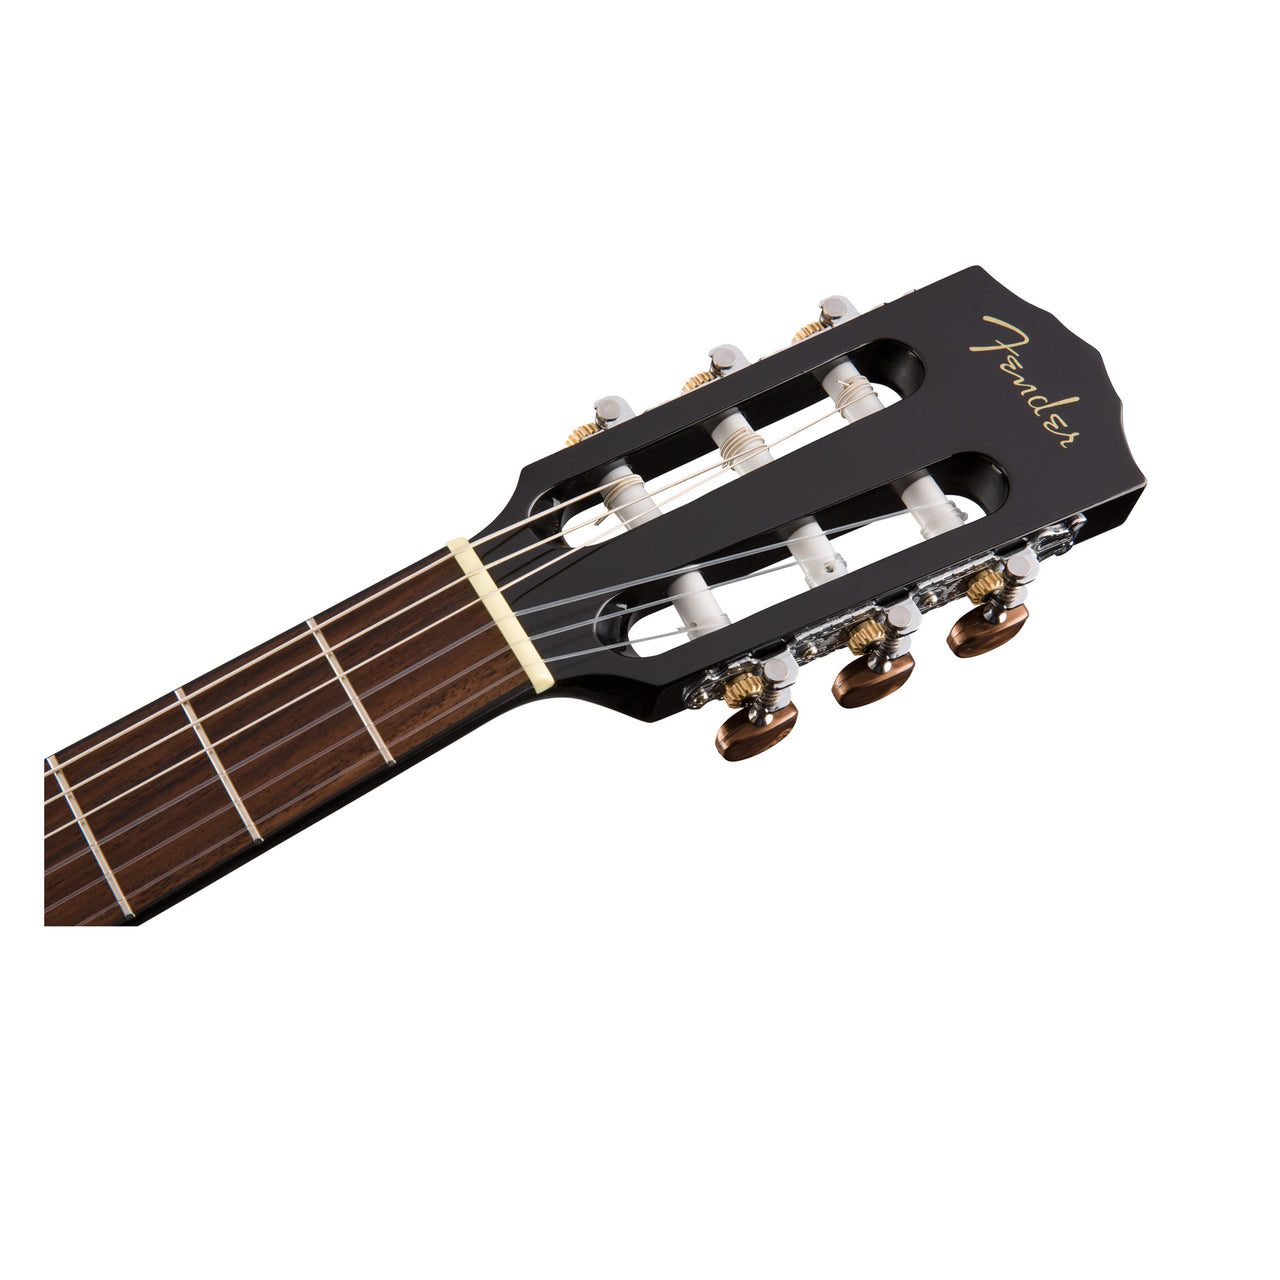 Guitarra Fender CN-60S Acústica Nylon Black Wn 0970160506